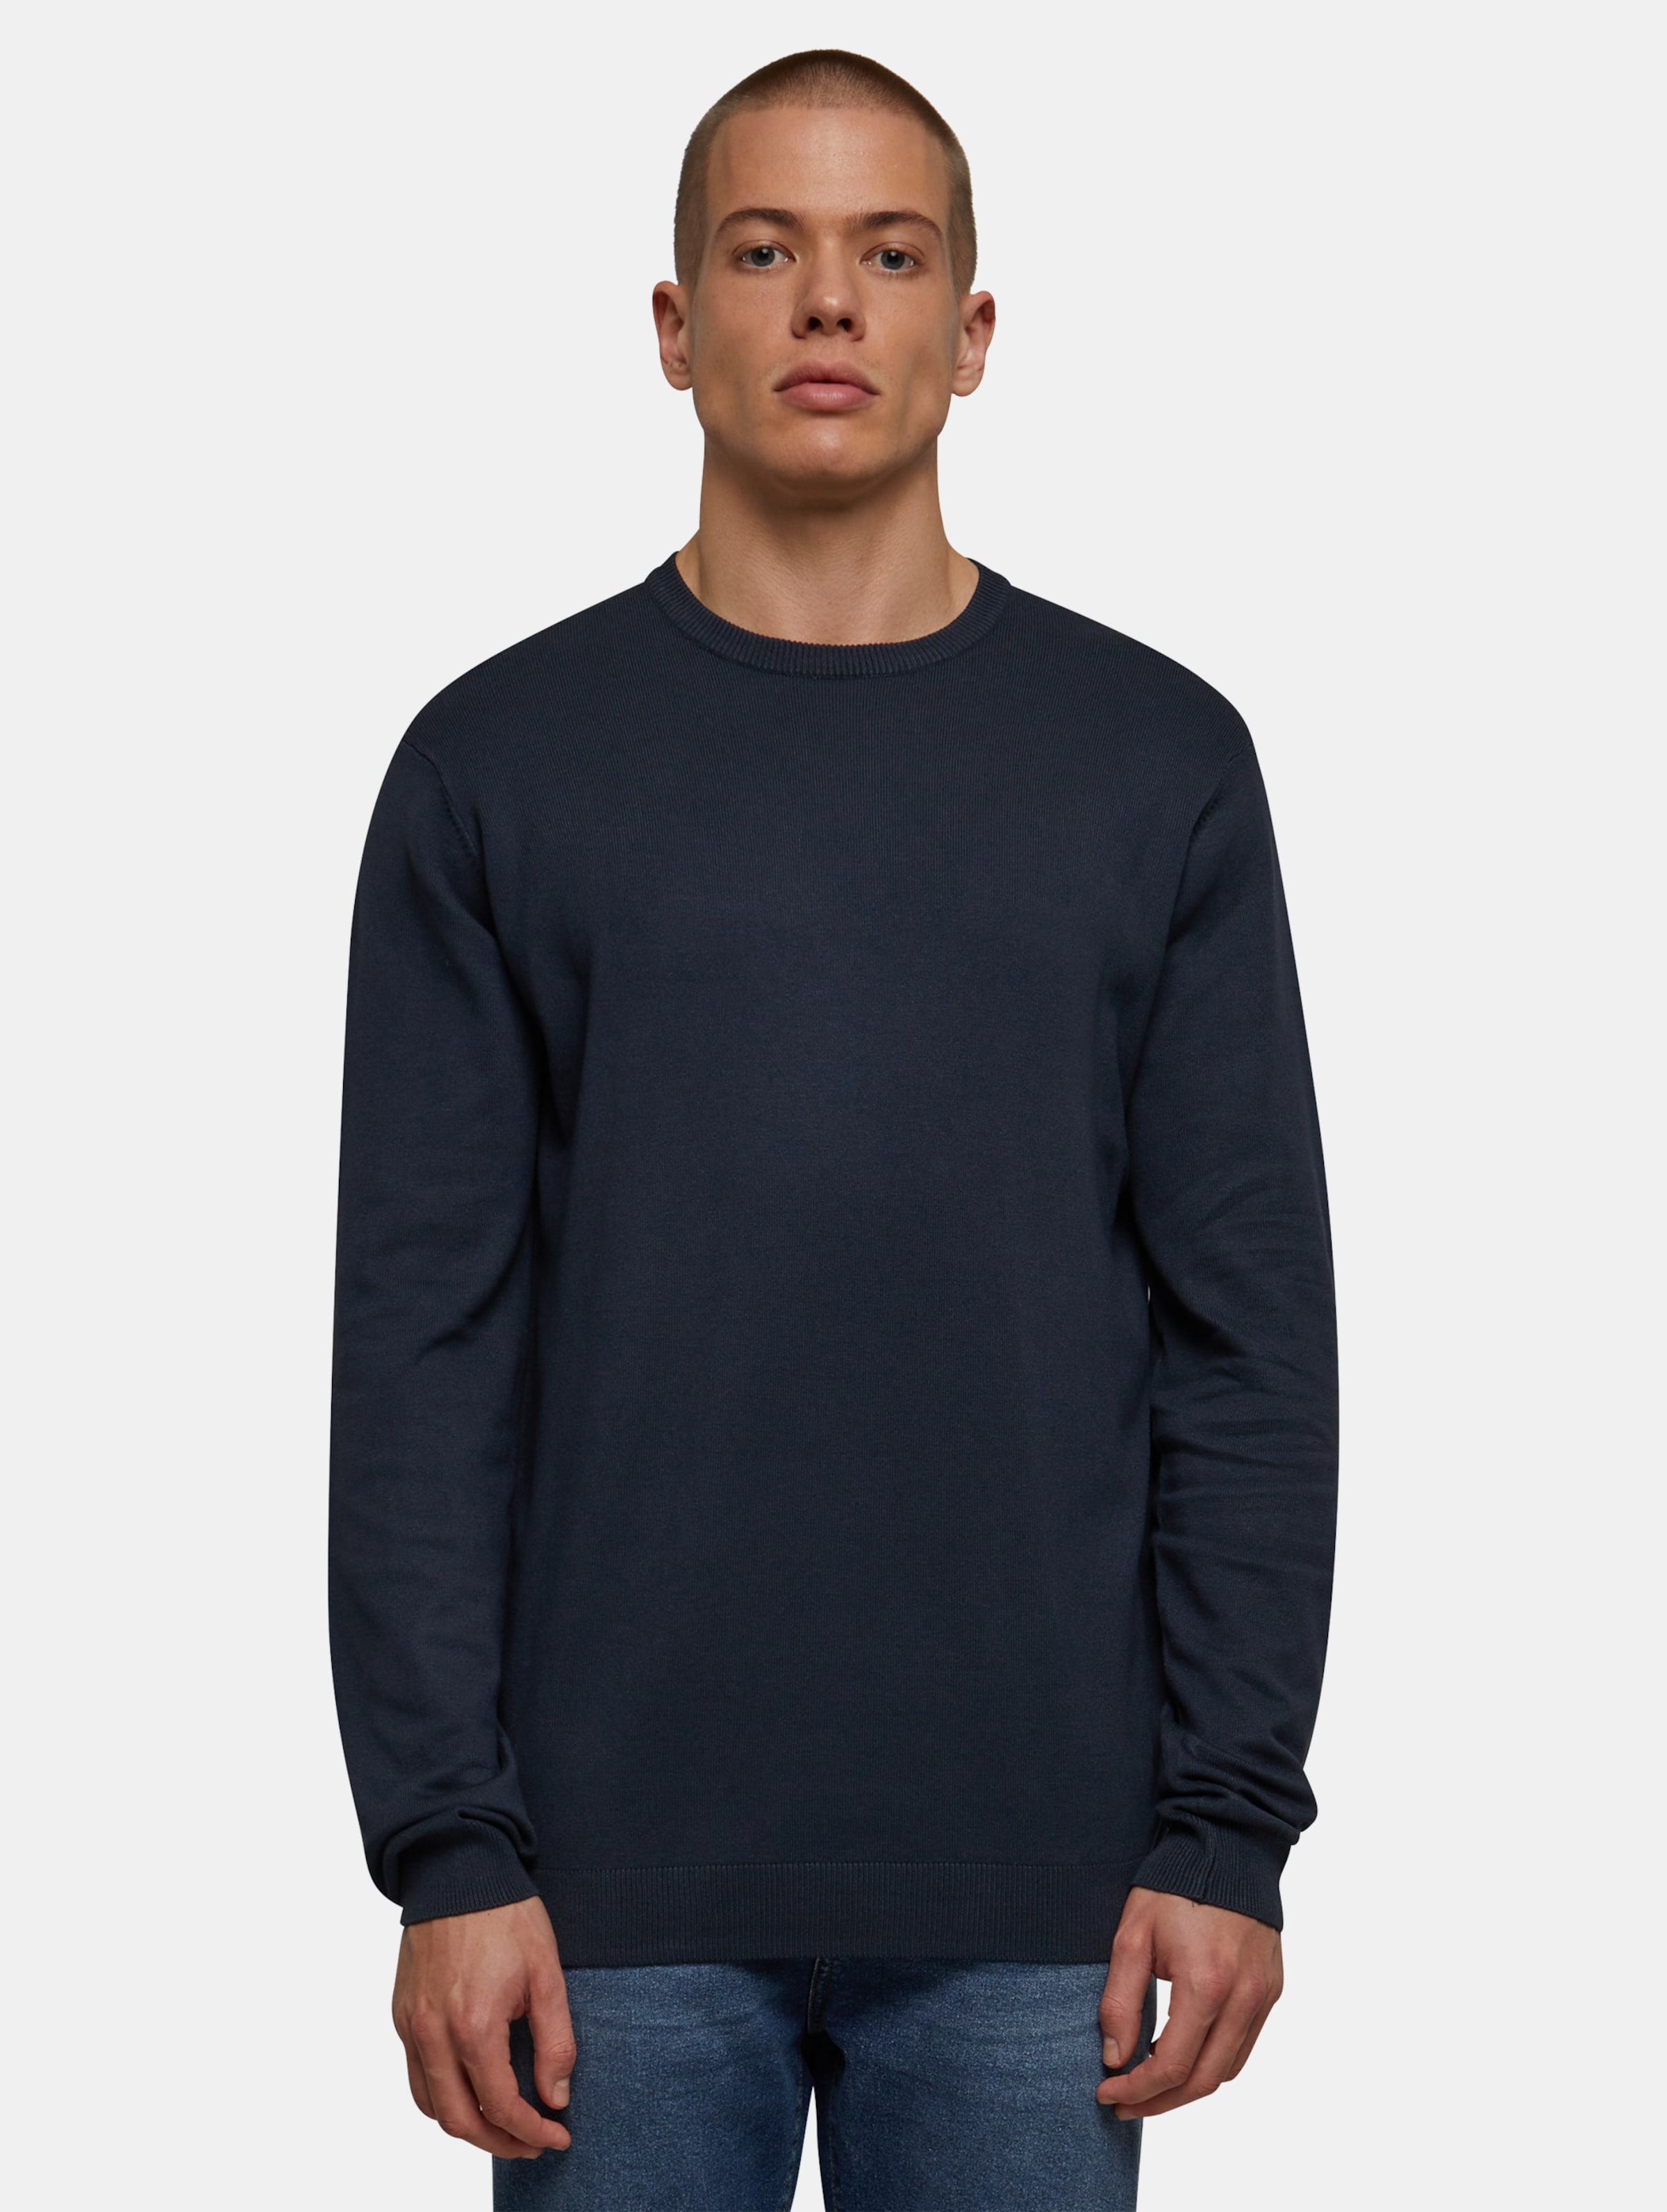 Urban Classics - Knitted Crewneck sweater - 4XL - Donkerblauw